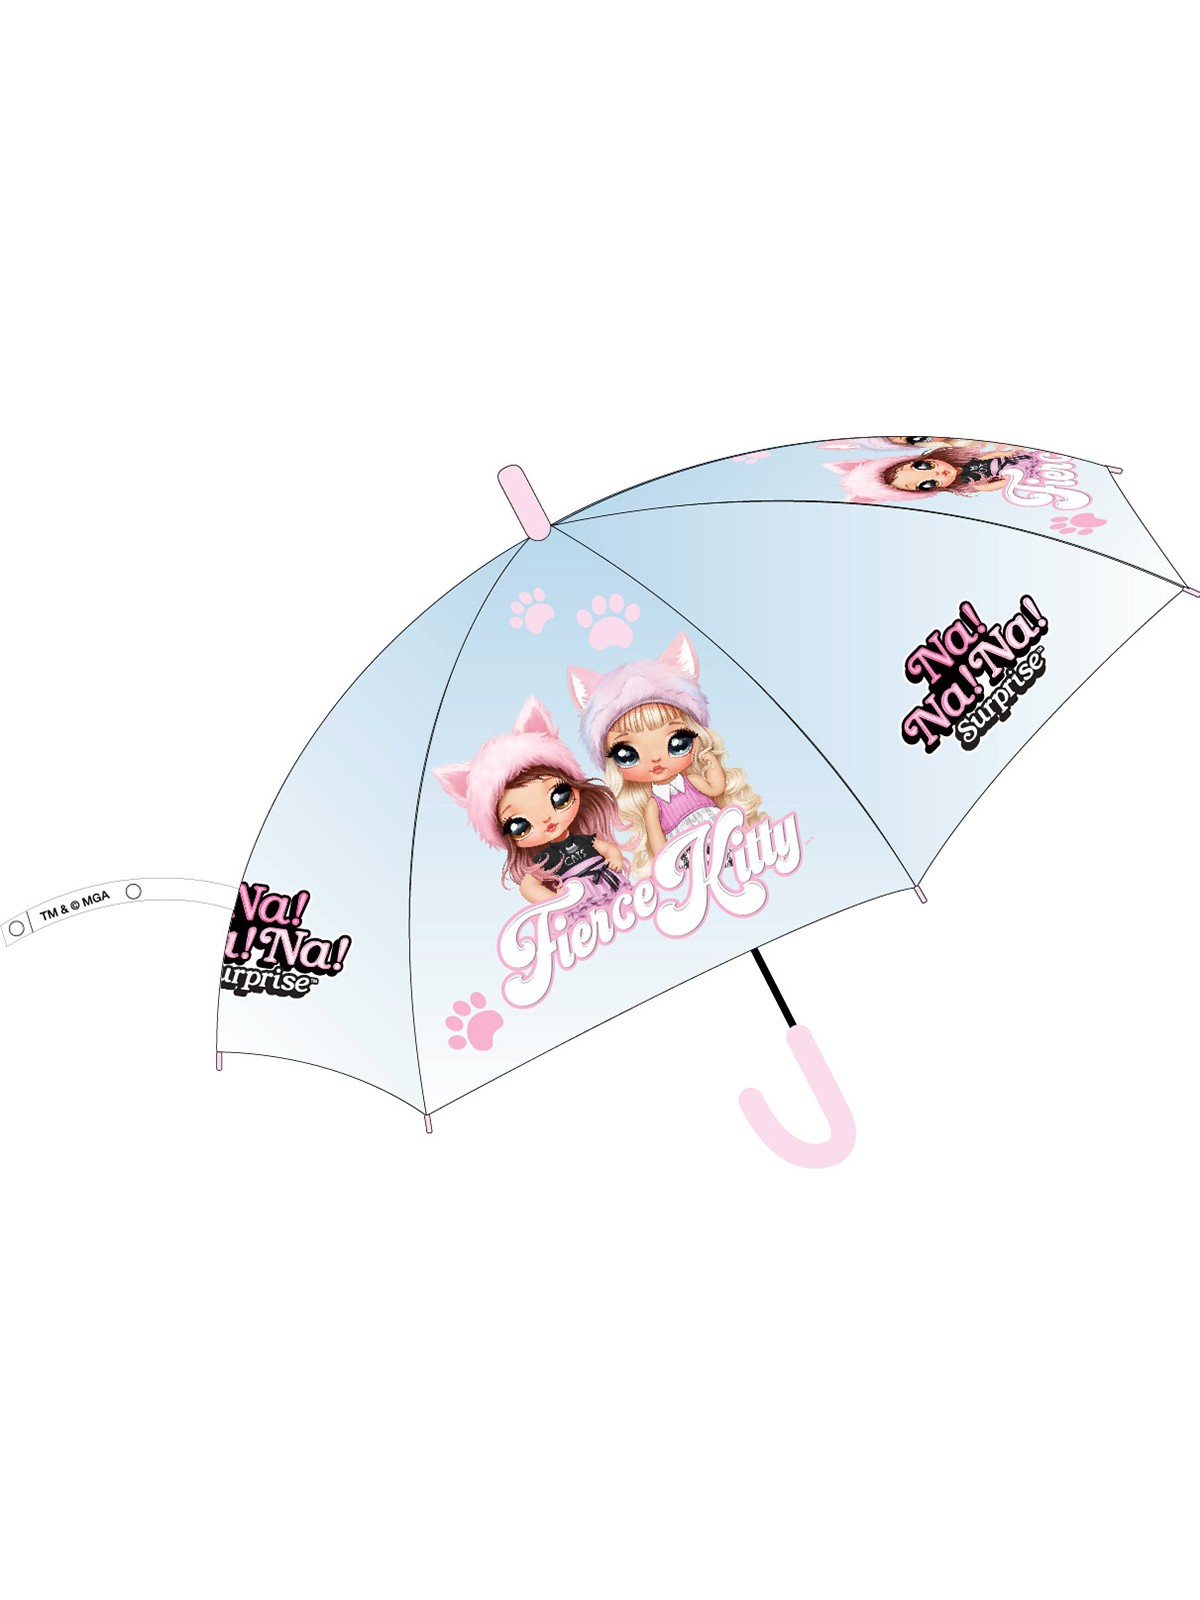 Parapluie Nana 